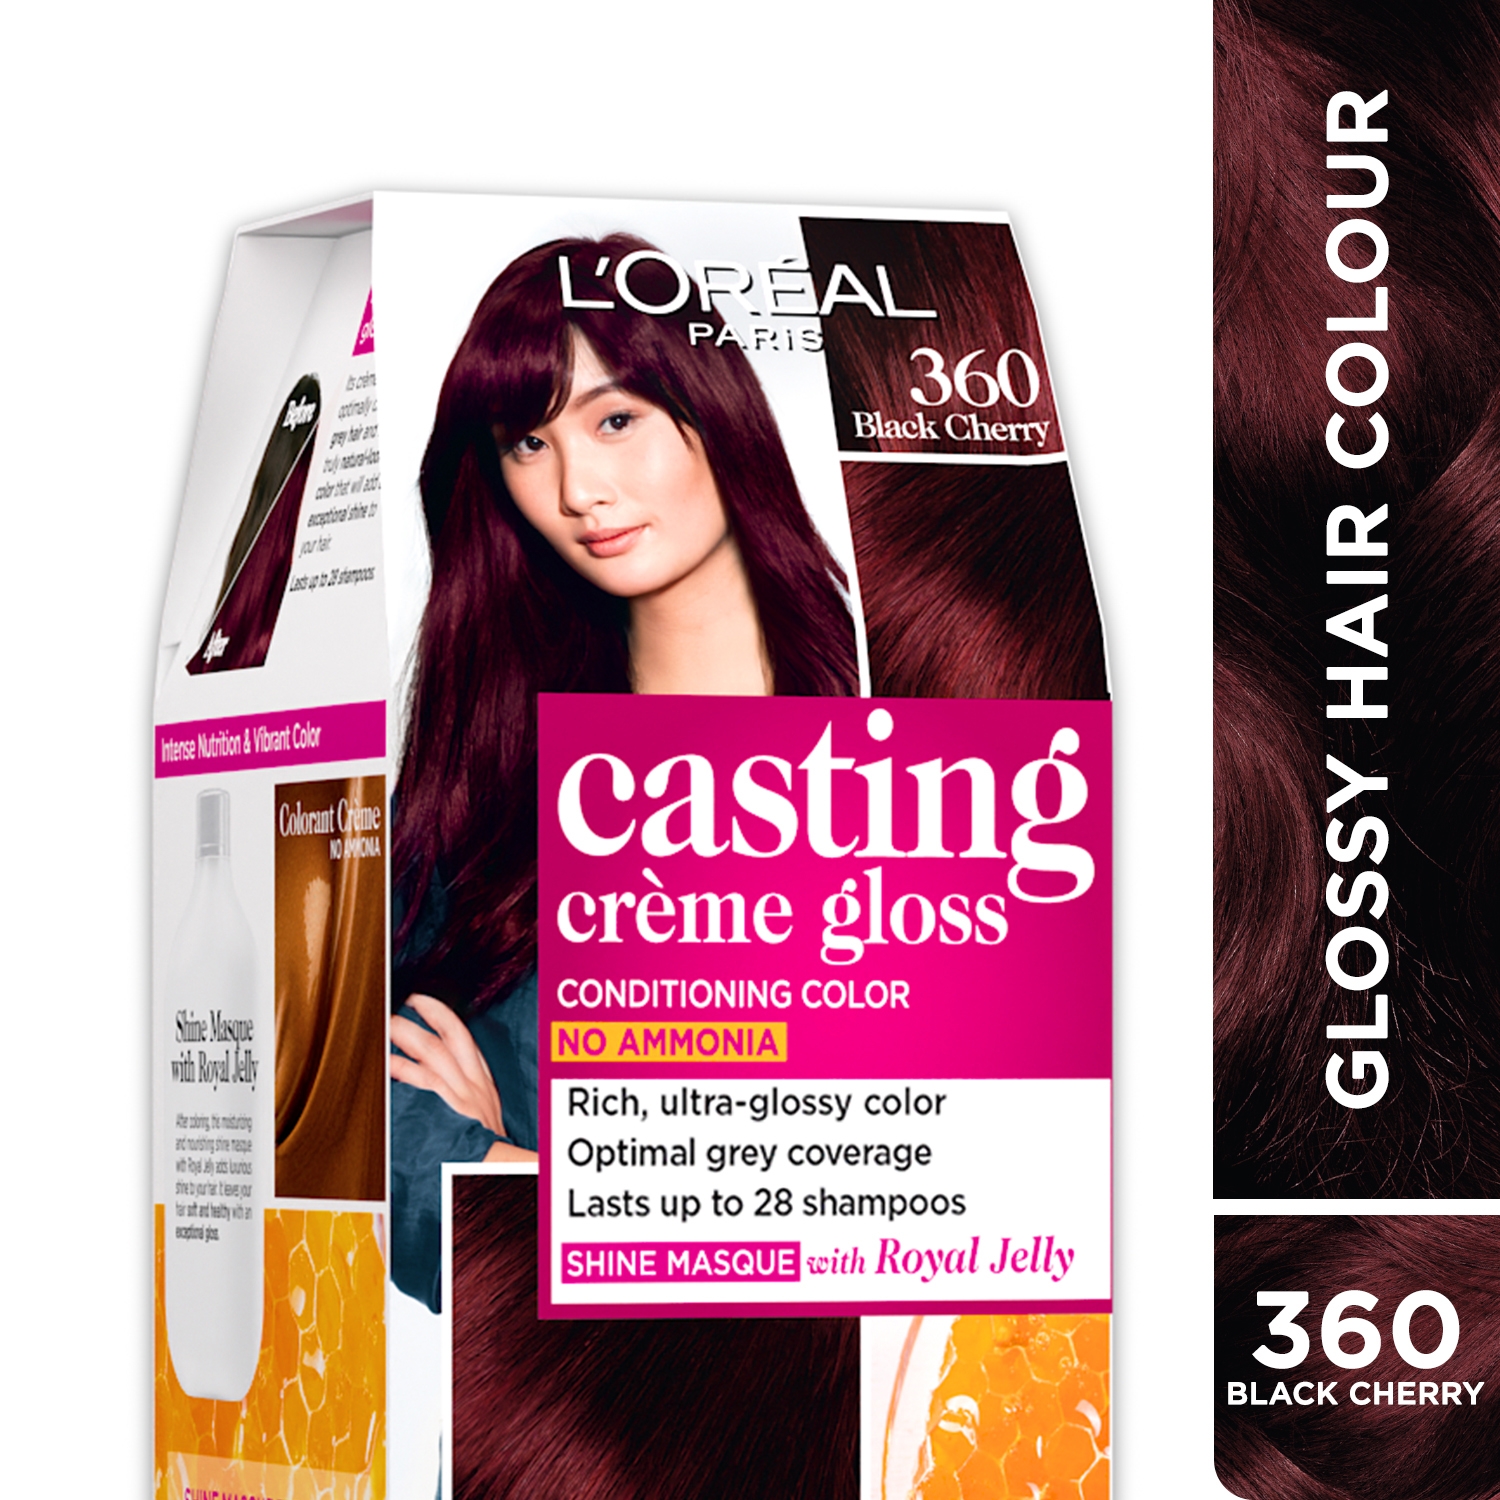 L'Oreal Paris Casting Creme Gloss Hair Color, 360 Black Cherry, 87.5g+72ml